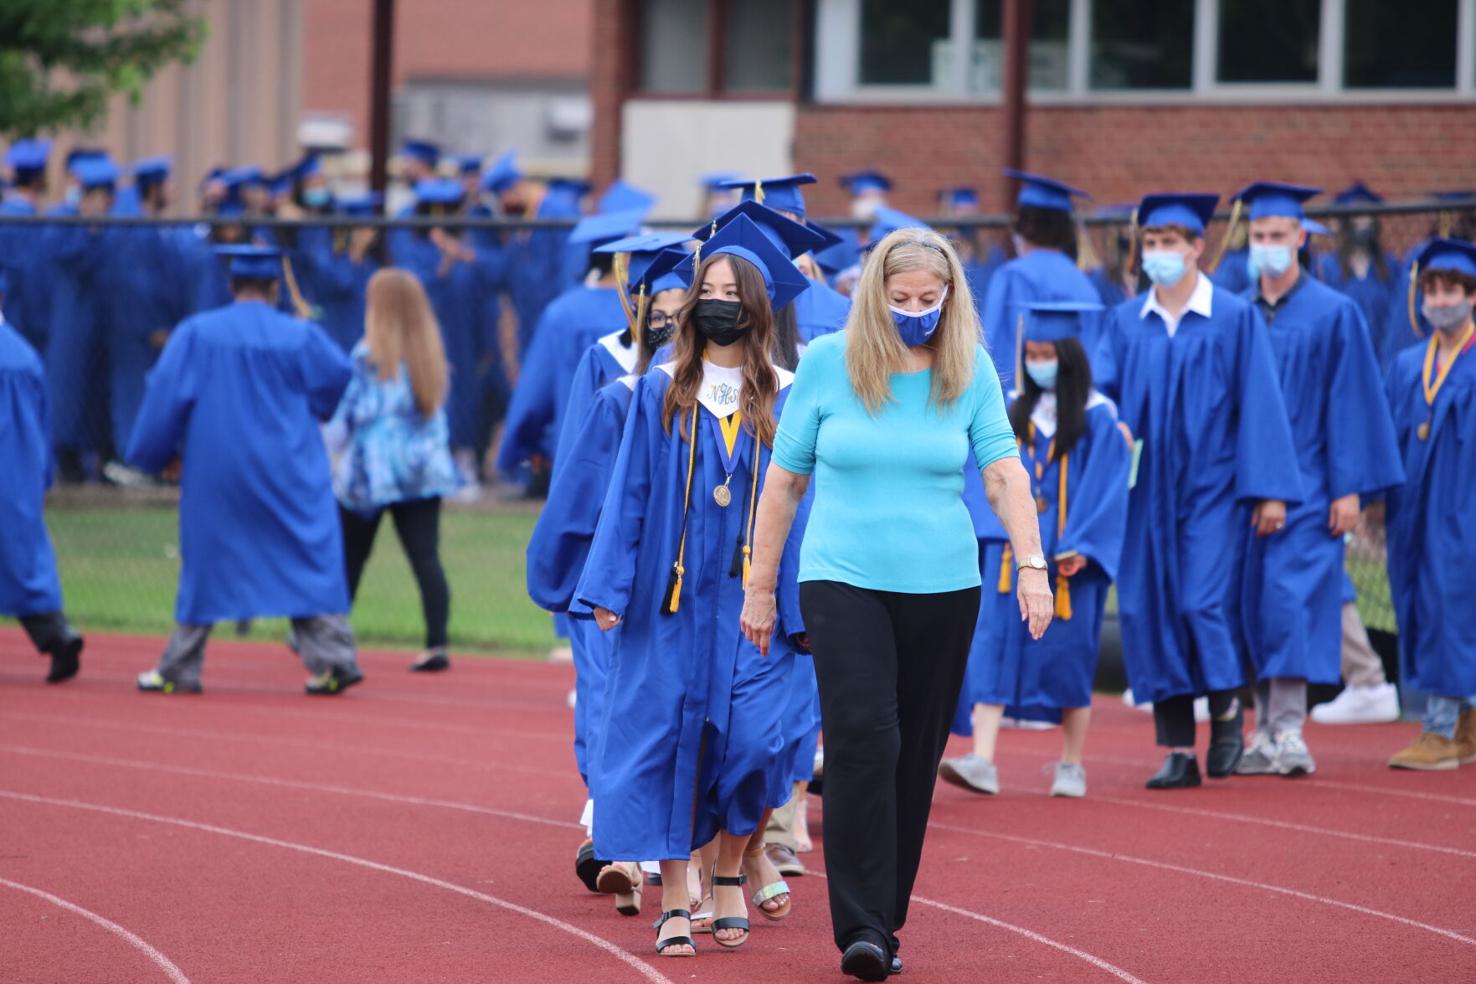 Stillwater High School celebrates graduation ceremony for highly